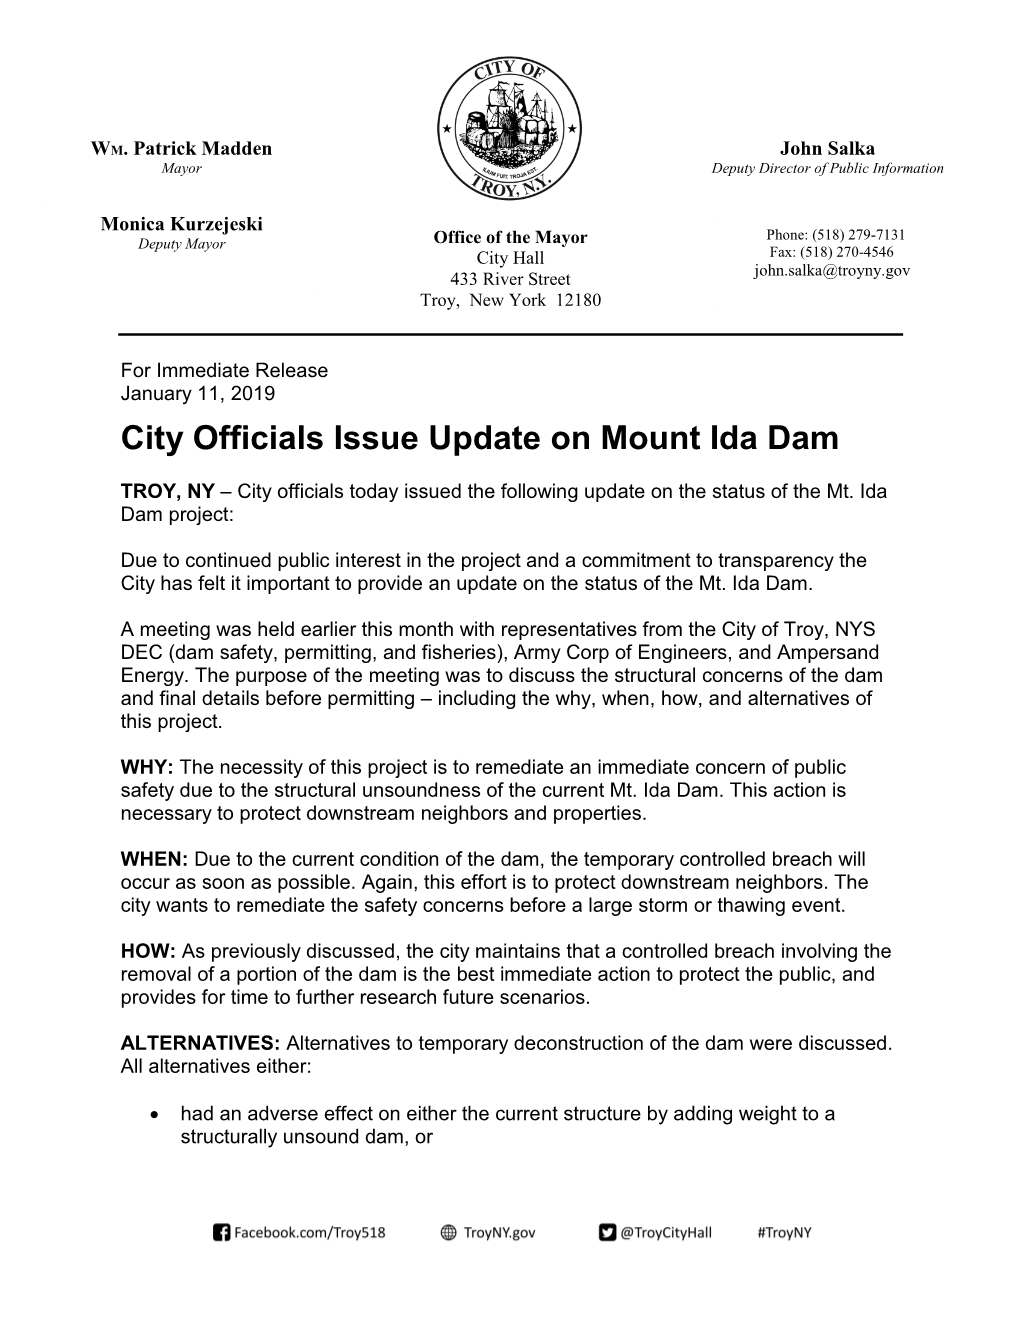 City Officials Issue Update on Mount Ida Dam